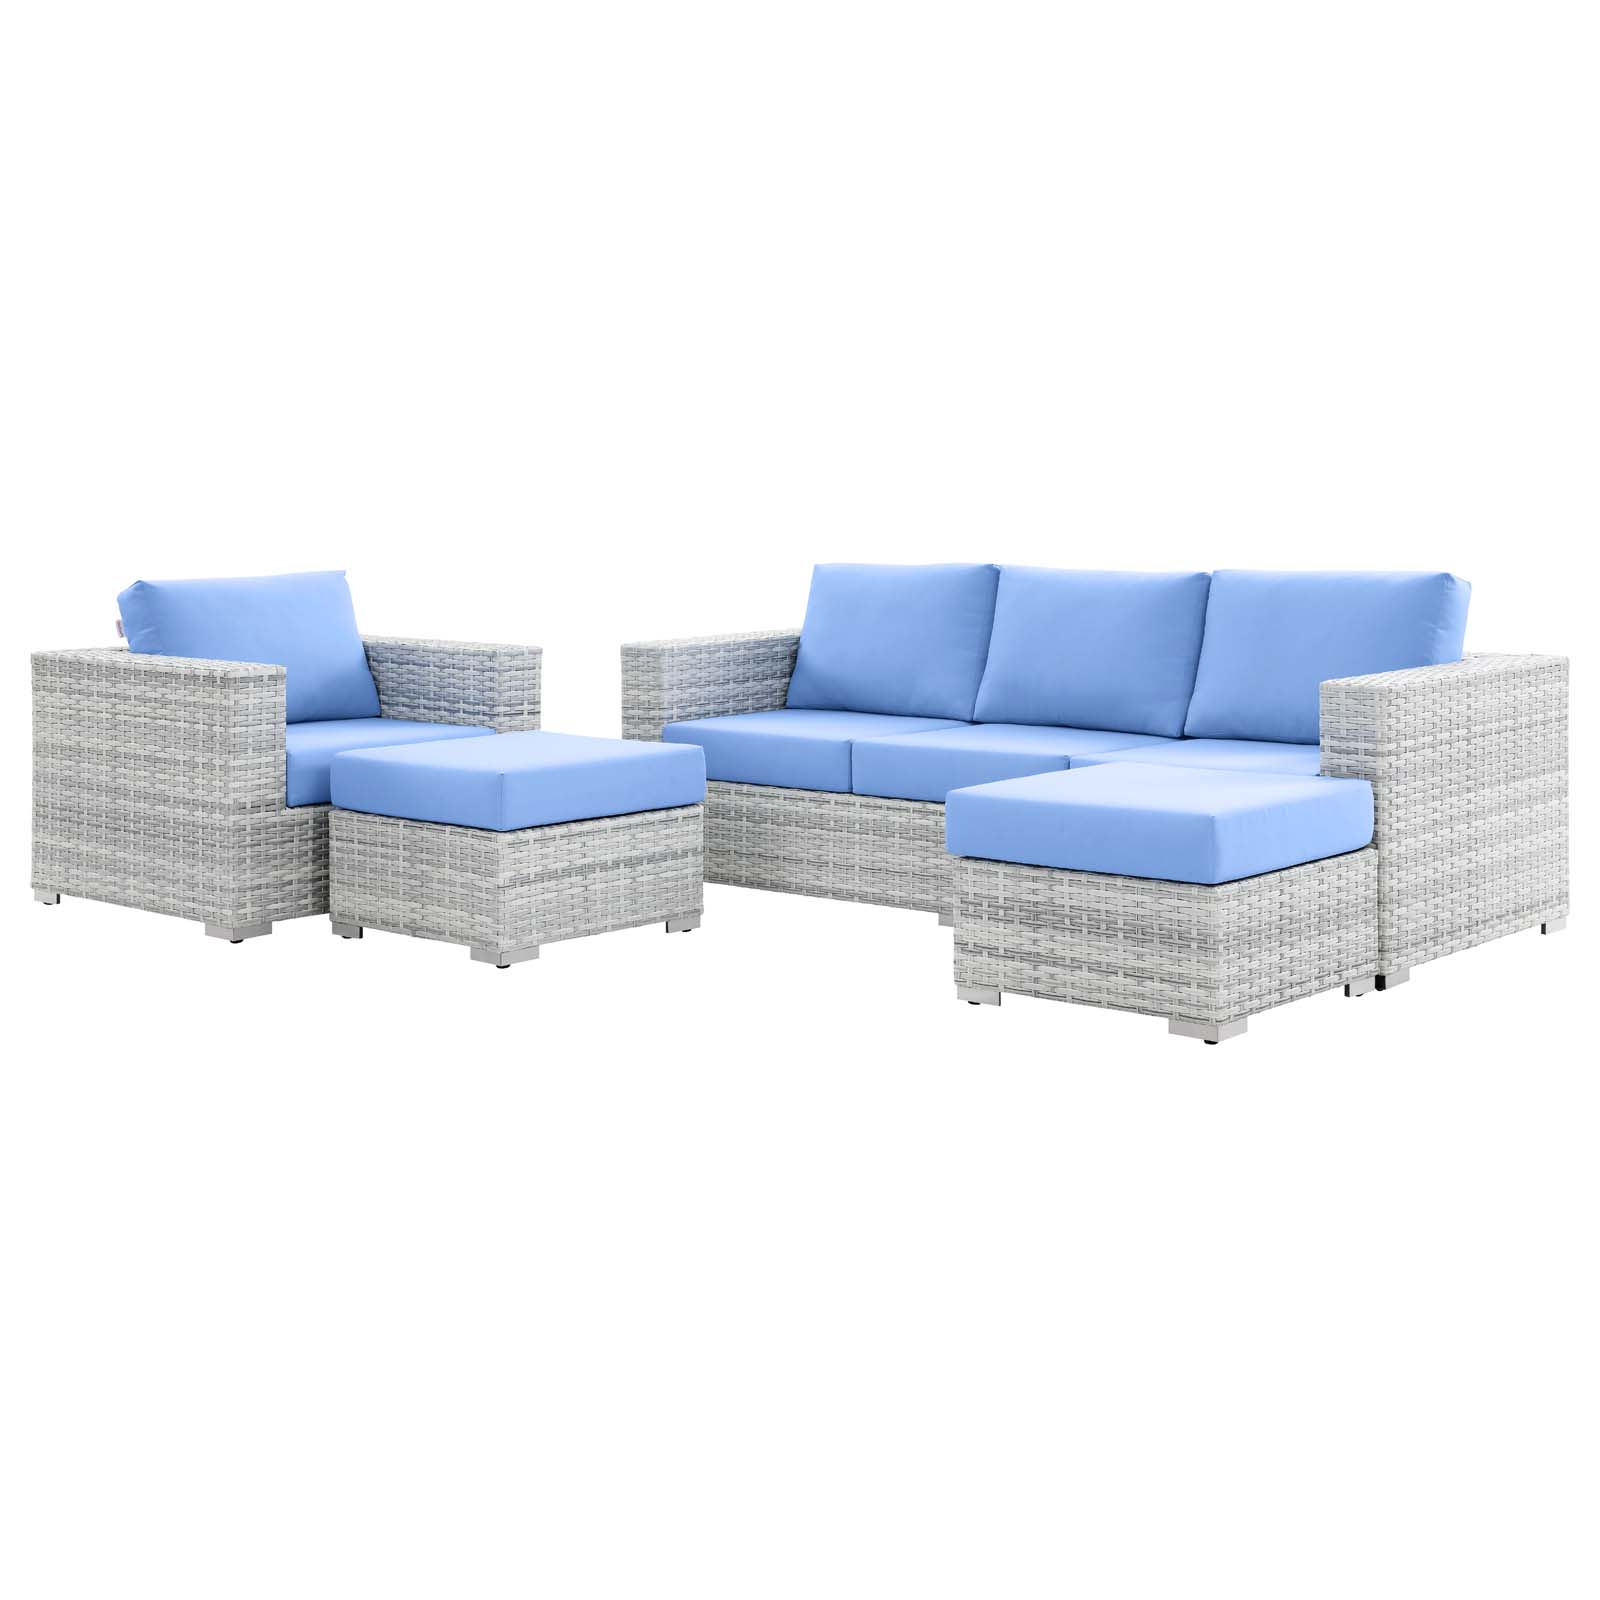 Lounge Sectional Sofa Chair Set, Rattan, Wicker, Light Grey Gray Light Blue, Modern Contemporary Urban Design, Outdoor Patio Balcony Cafe Bistro Garden Furniture Hotel Hospitality - image 1 of 10